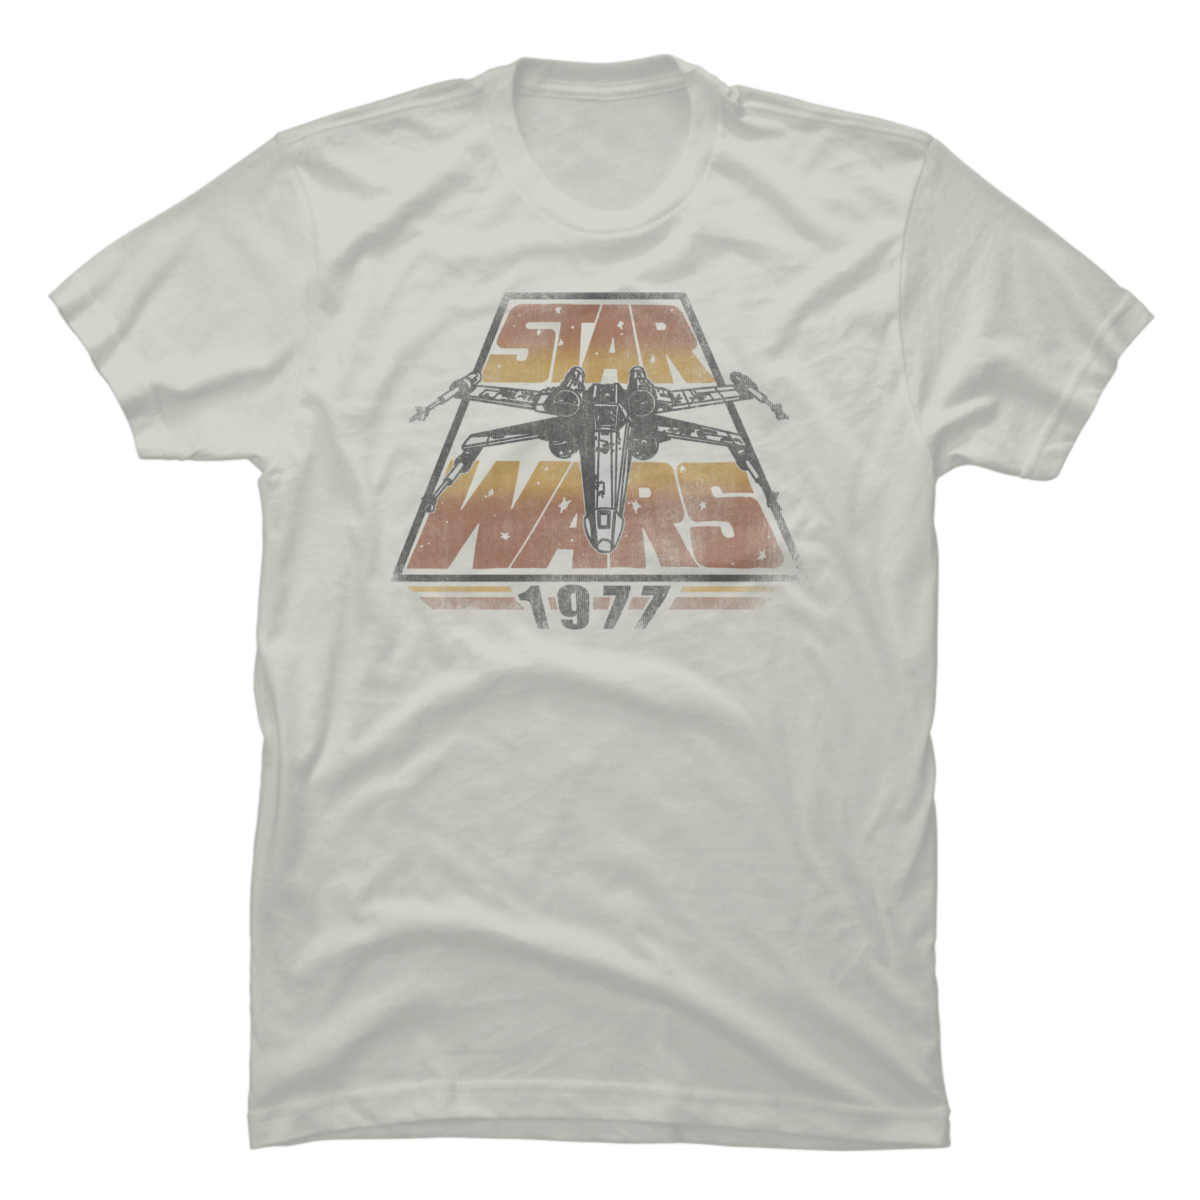 original 1977 star wars t-shirt